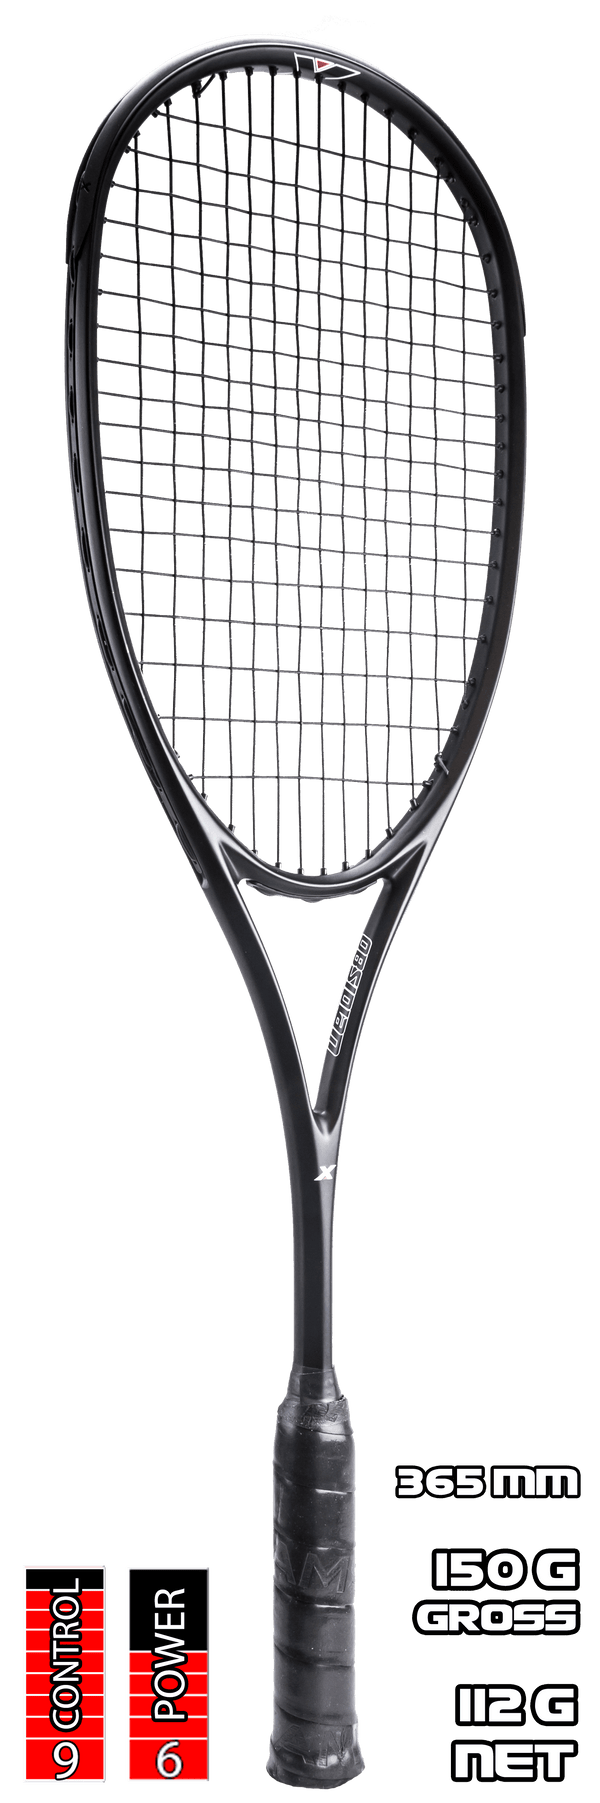 Xamsa Squash Racquets Comparison Chart – XamsaSquash